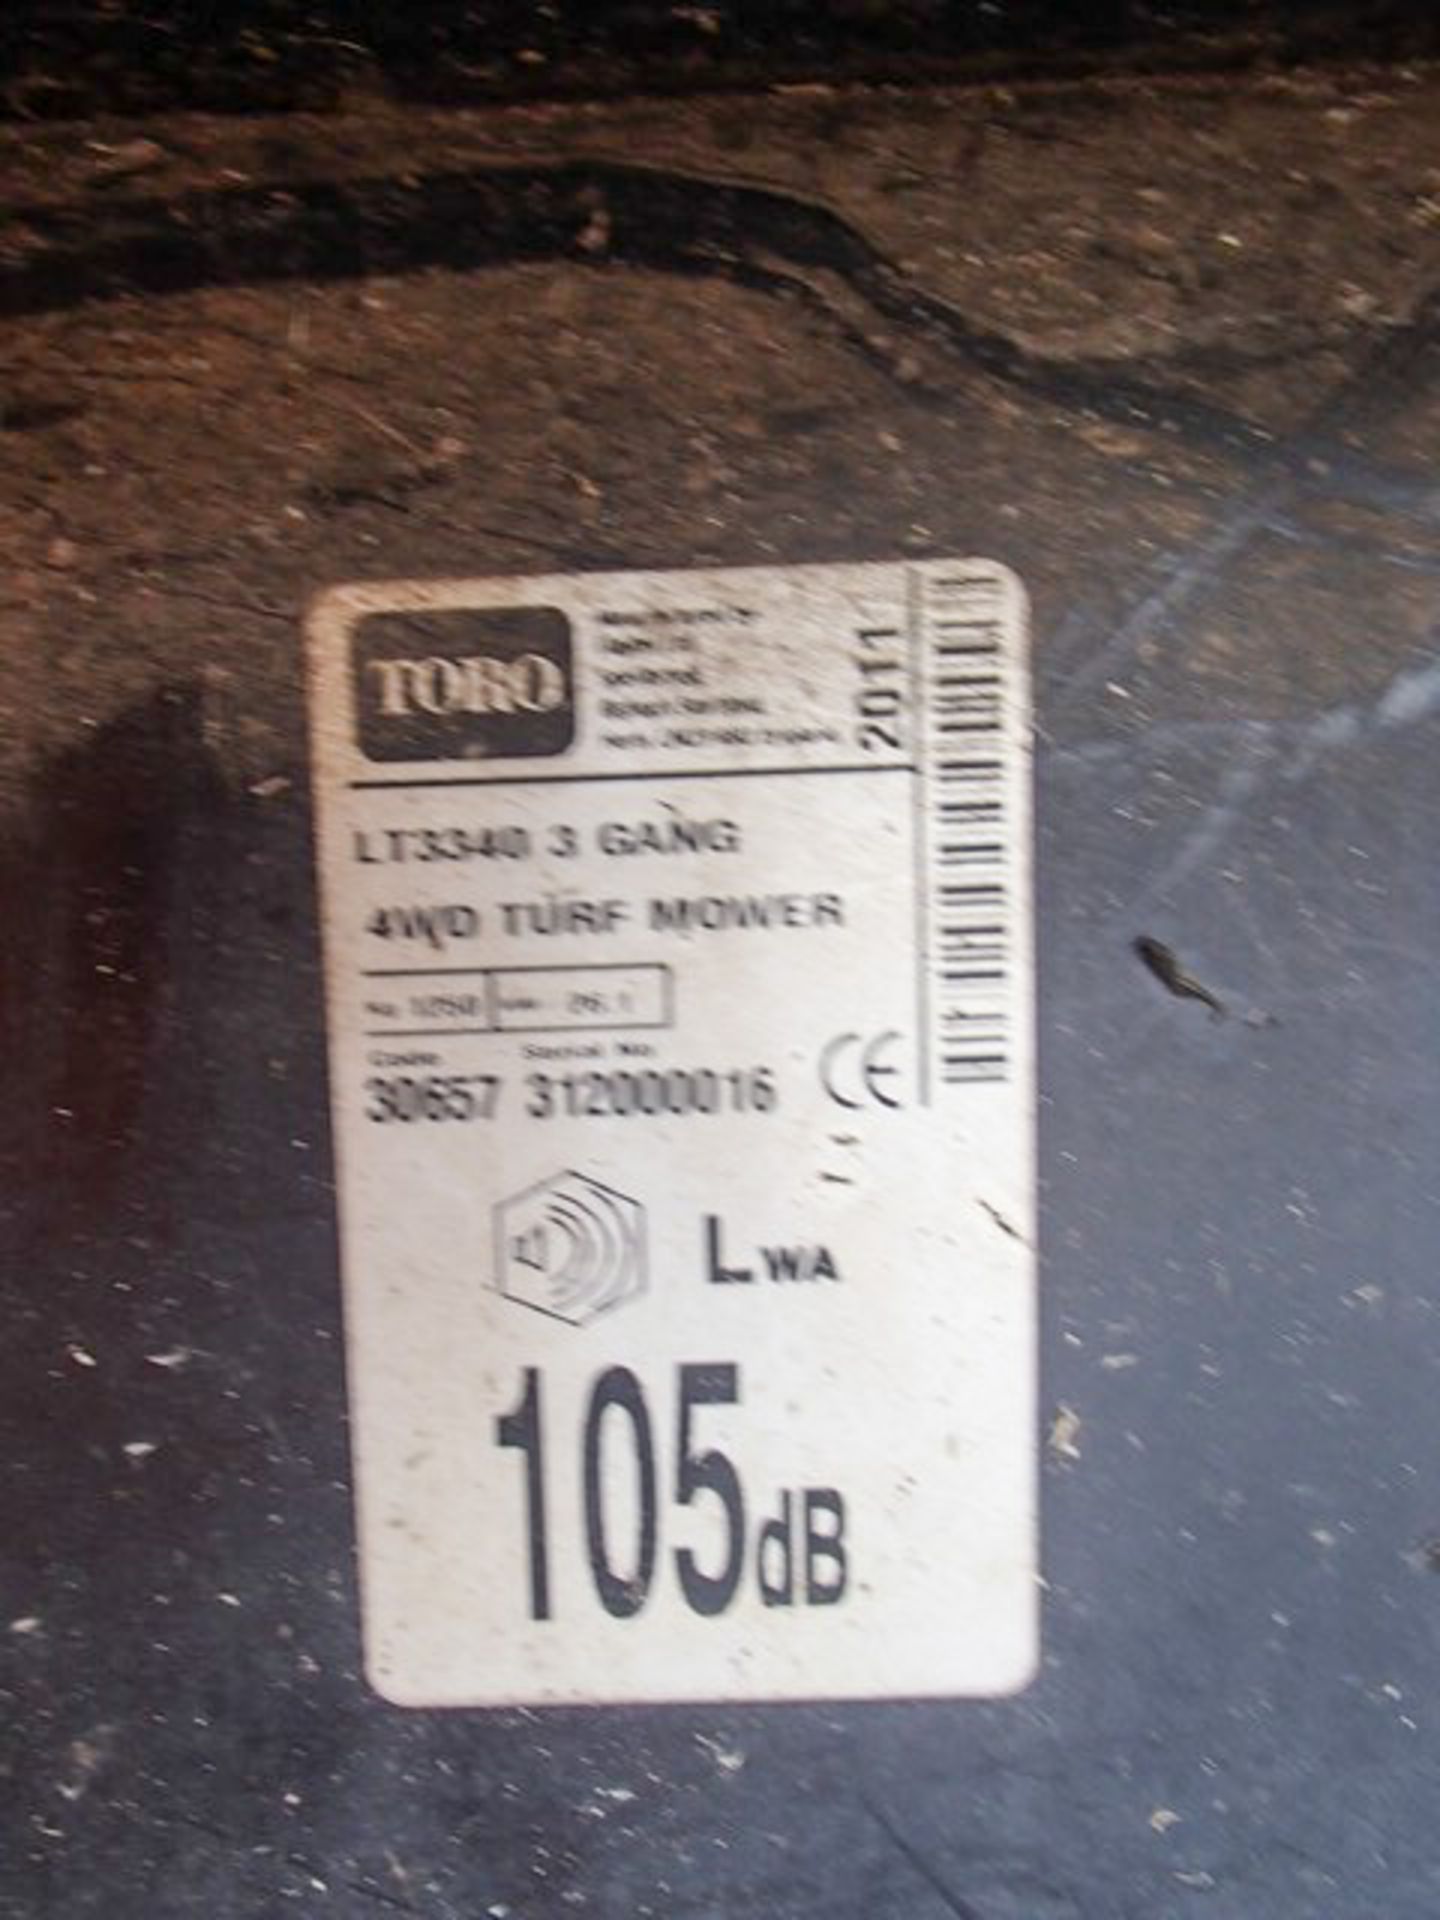 2012 TORO MOWING MACHINE, 2 AXLES, 1498CC, REG - SP61 EBZ - 1779 HRS (NOT VERIFIED) - Image 12 of 17